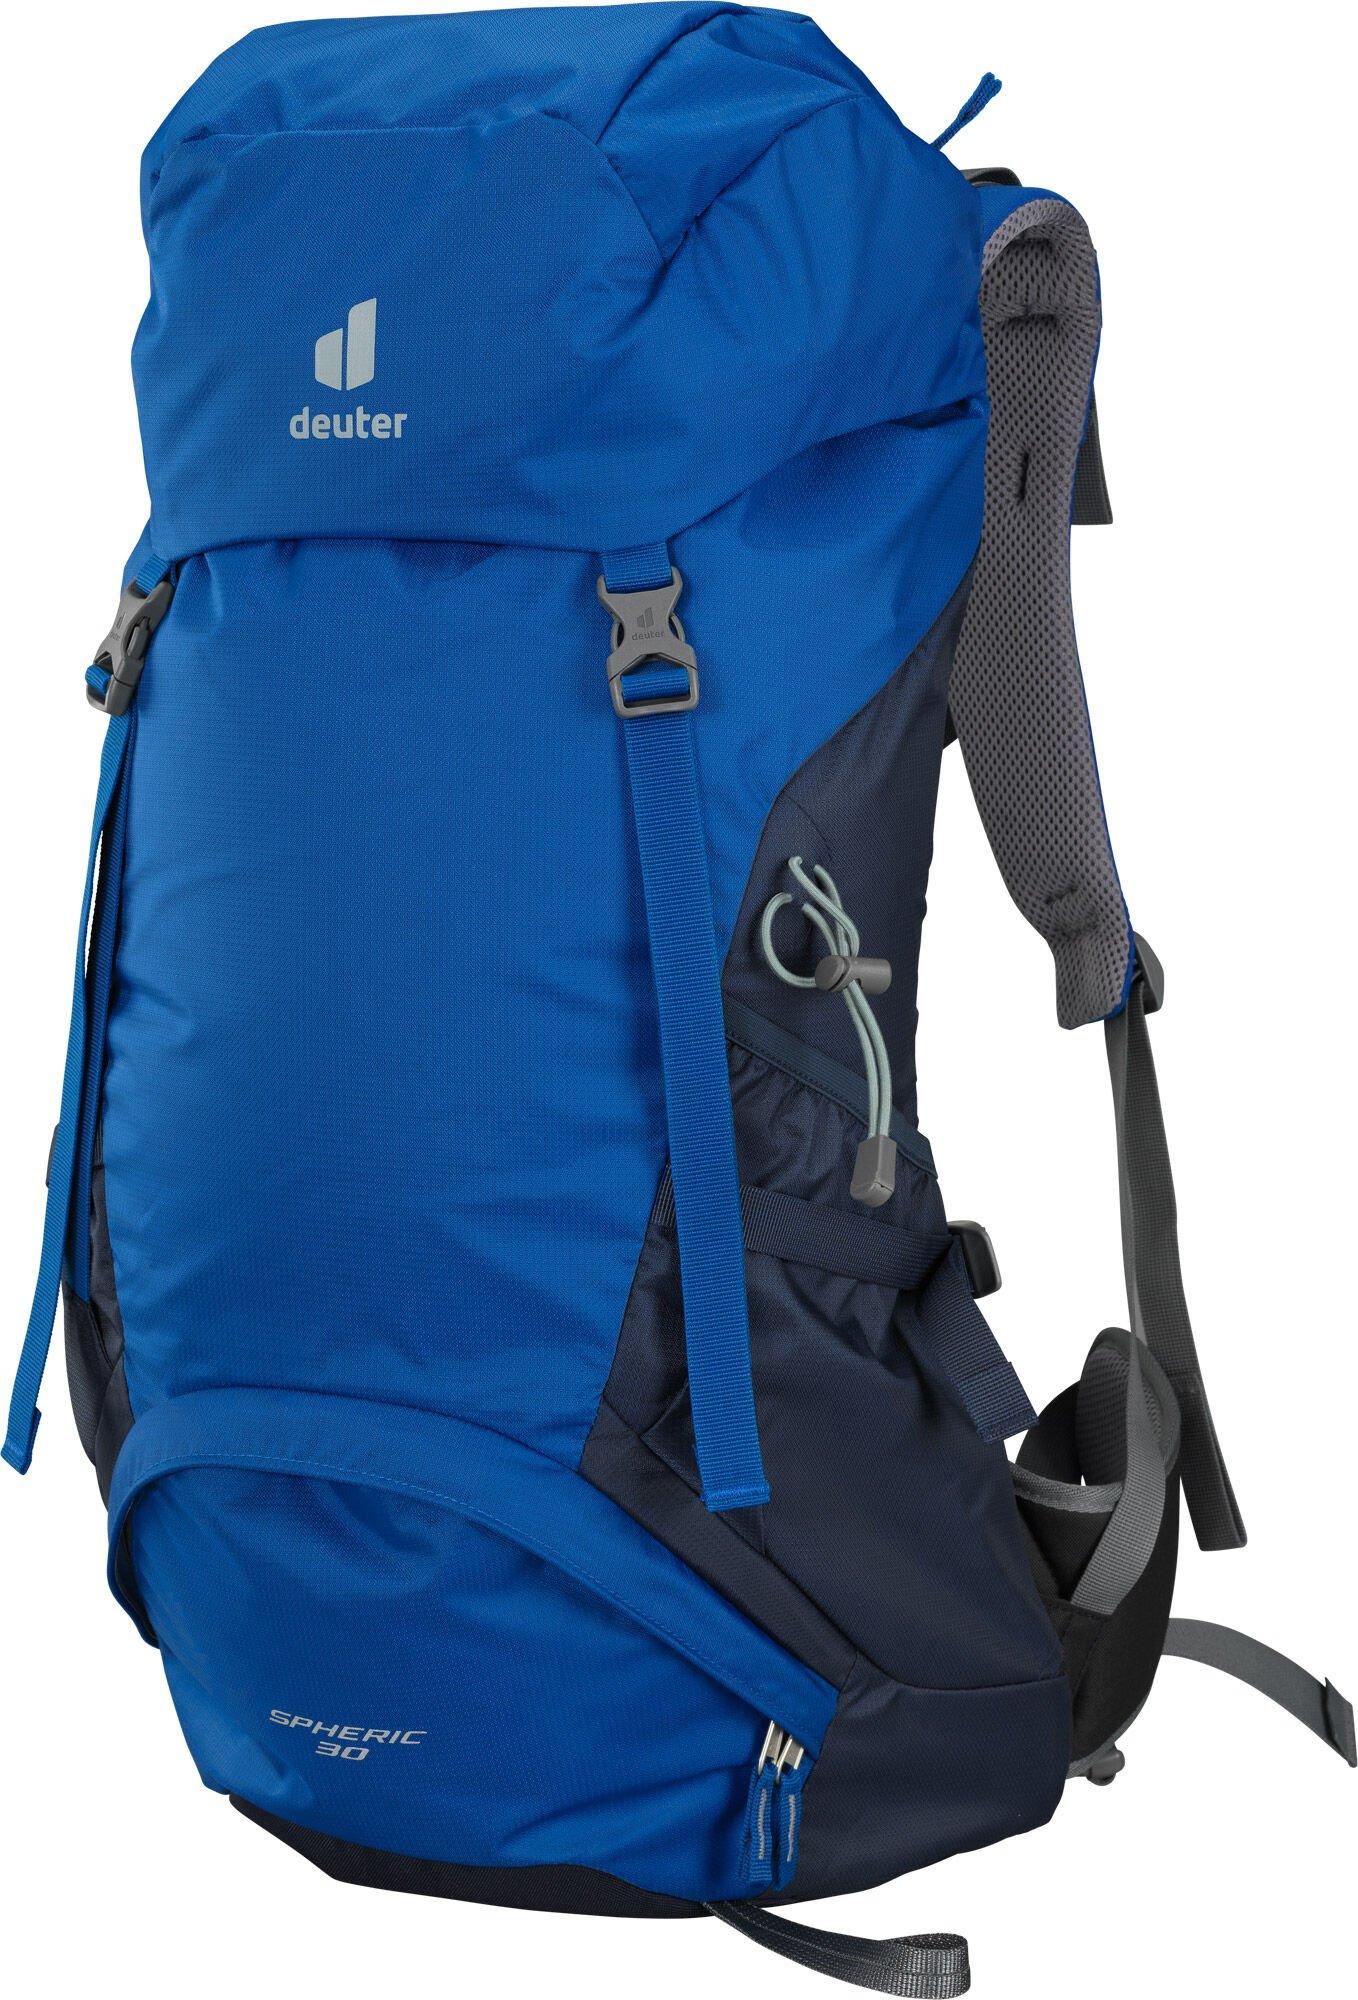 Deuter Spheric 30 Hiking Backpack Velikost: Univerzální velikost